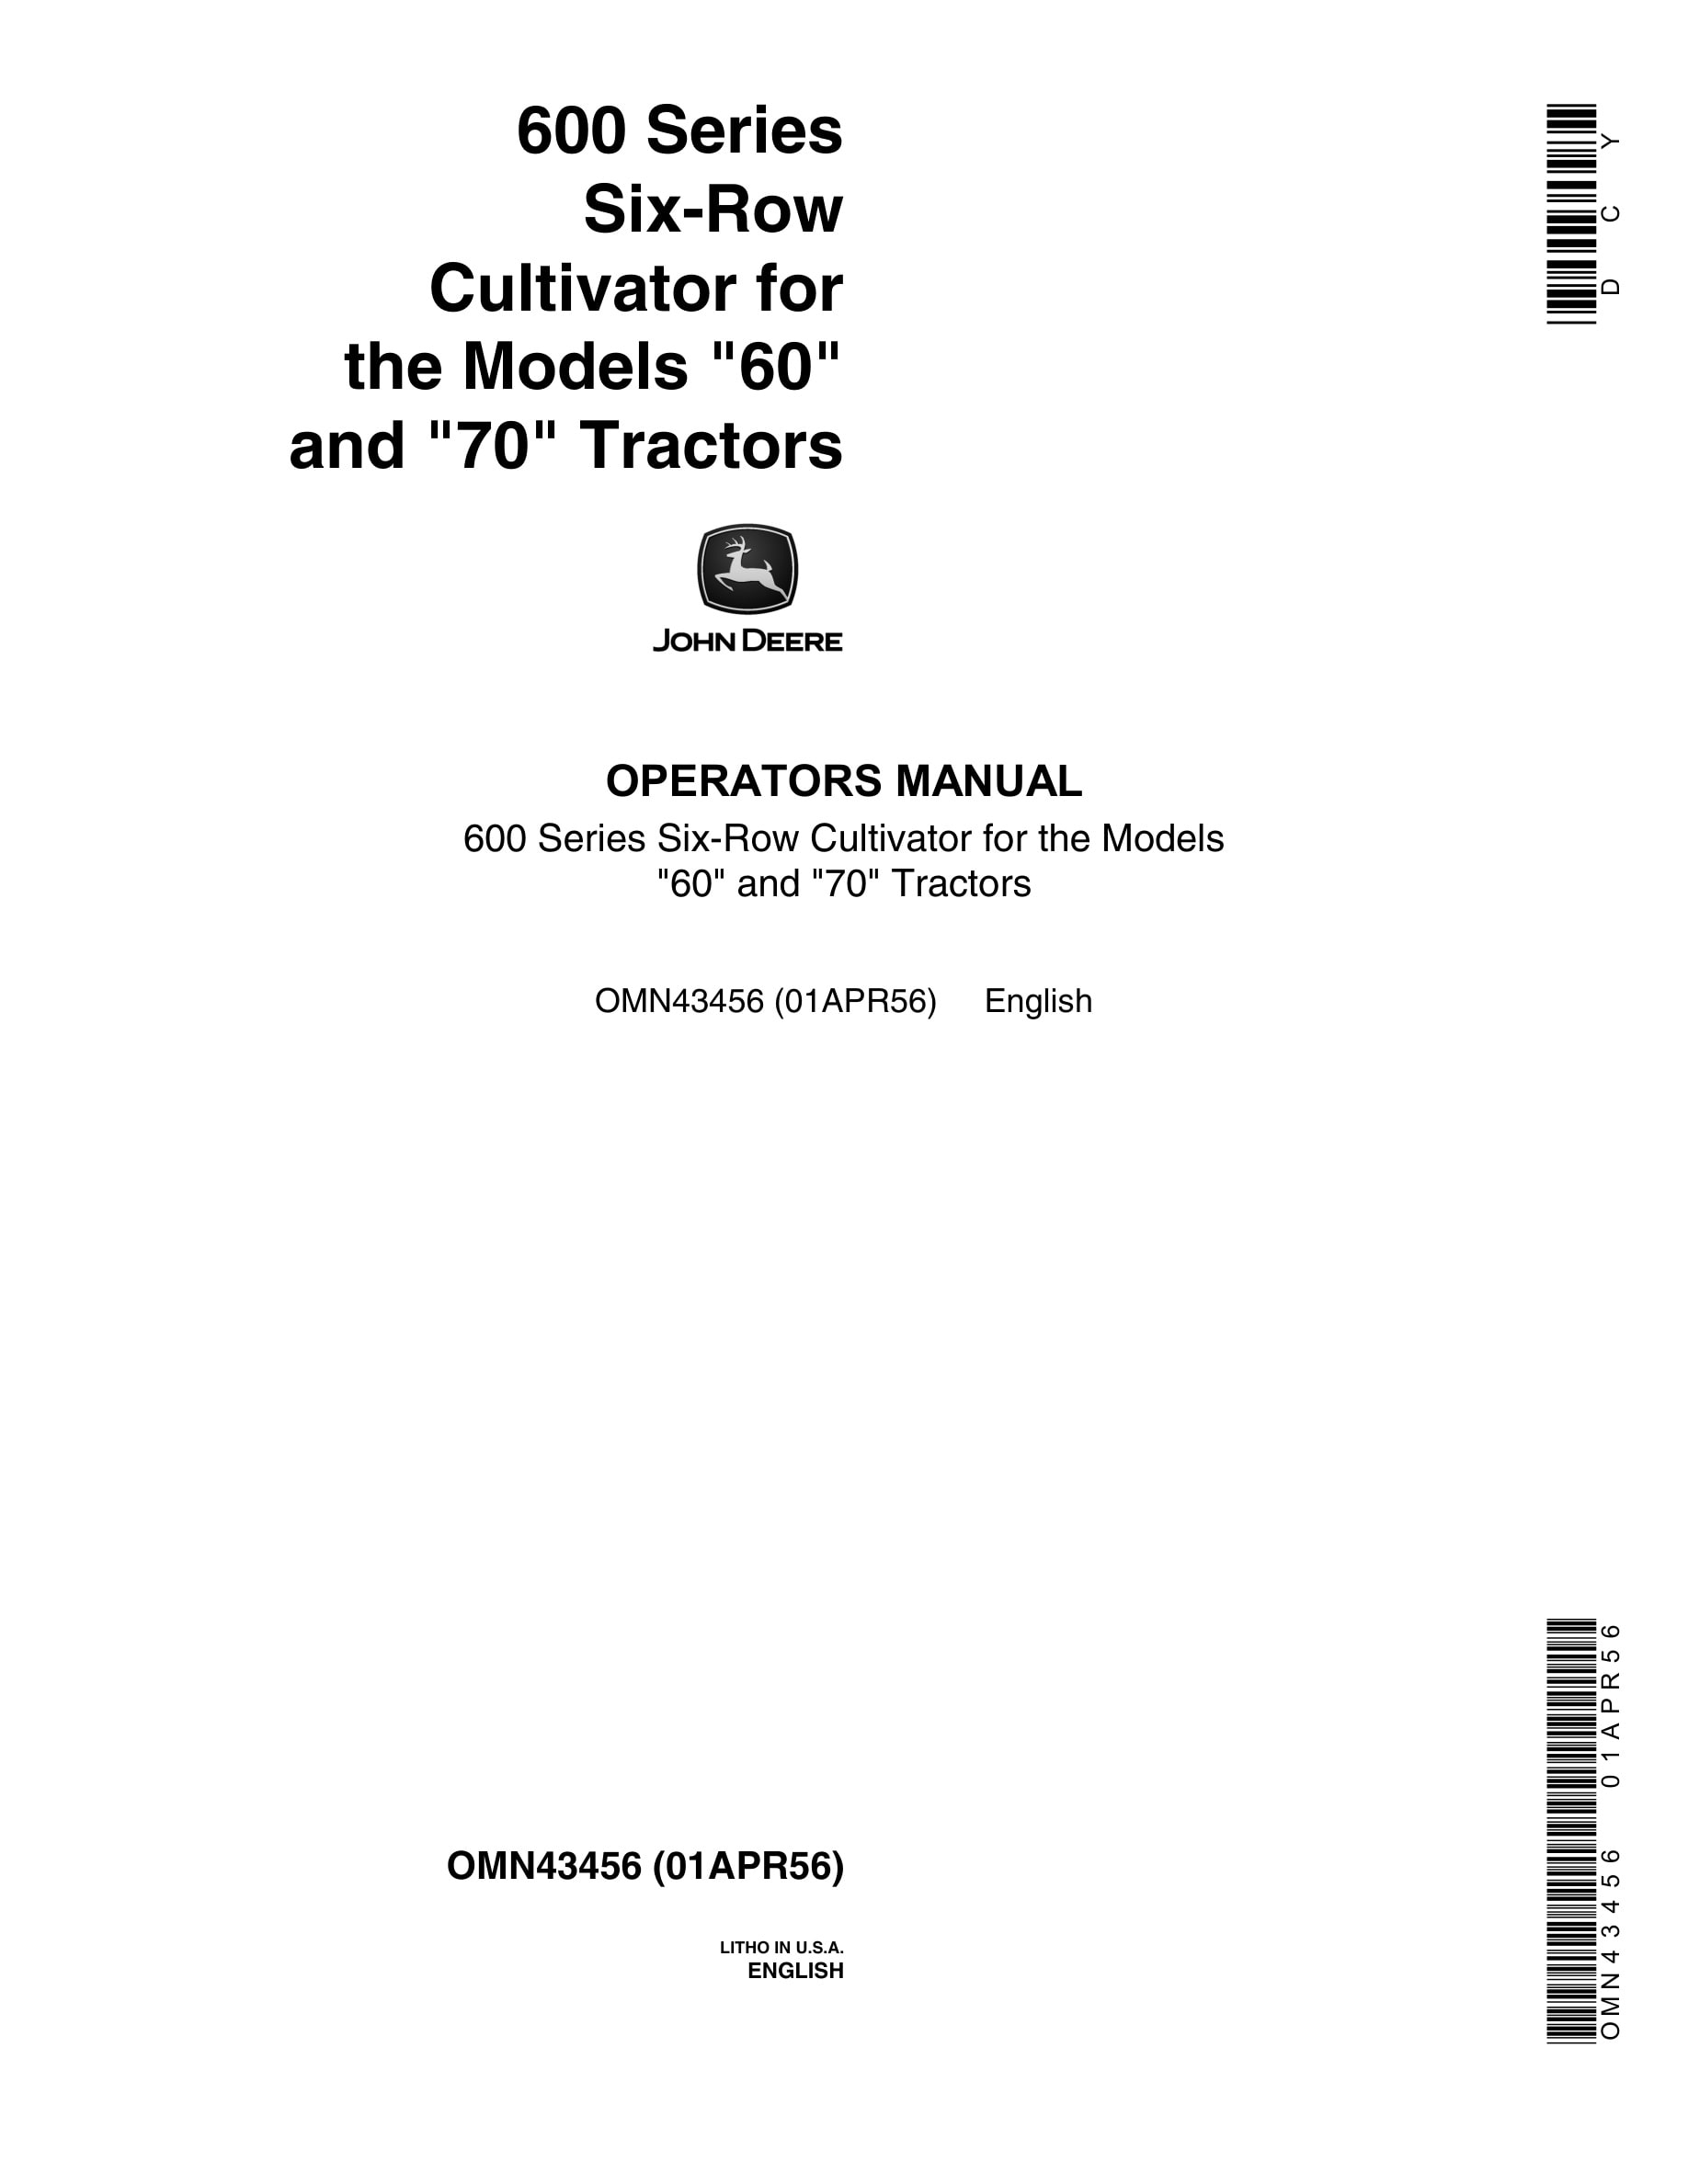 John Deere 600 Series Six-Row CULTIVATOR Operator Manual OMN43456-1